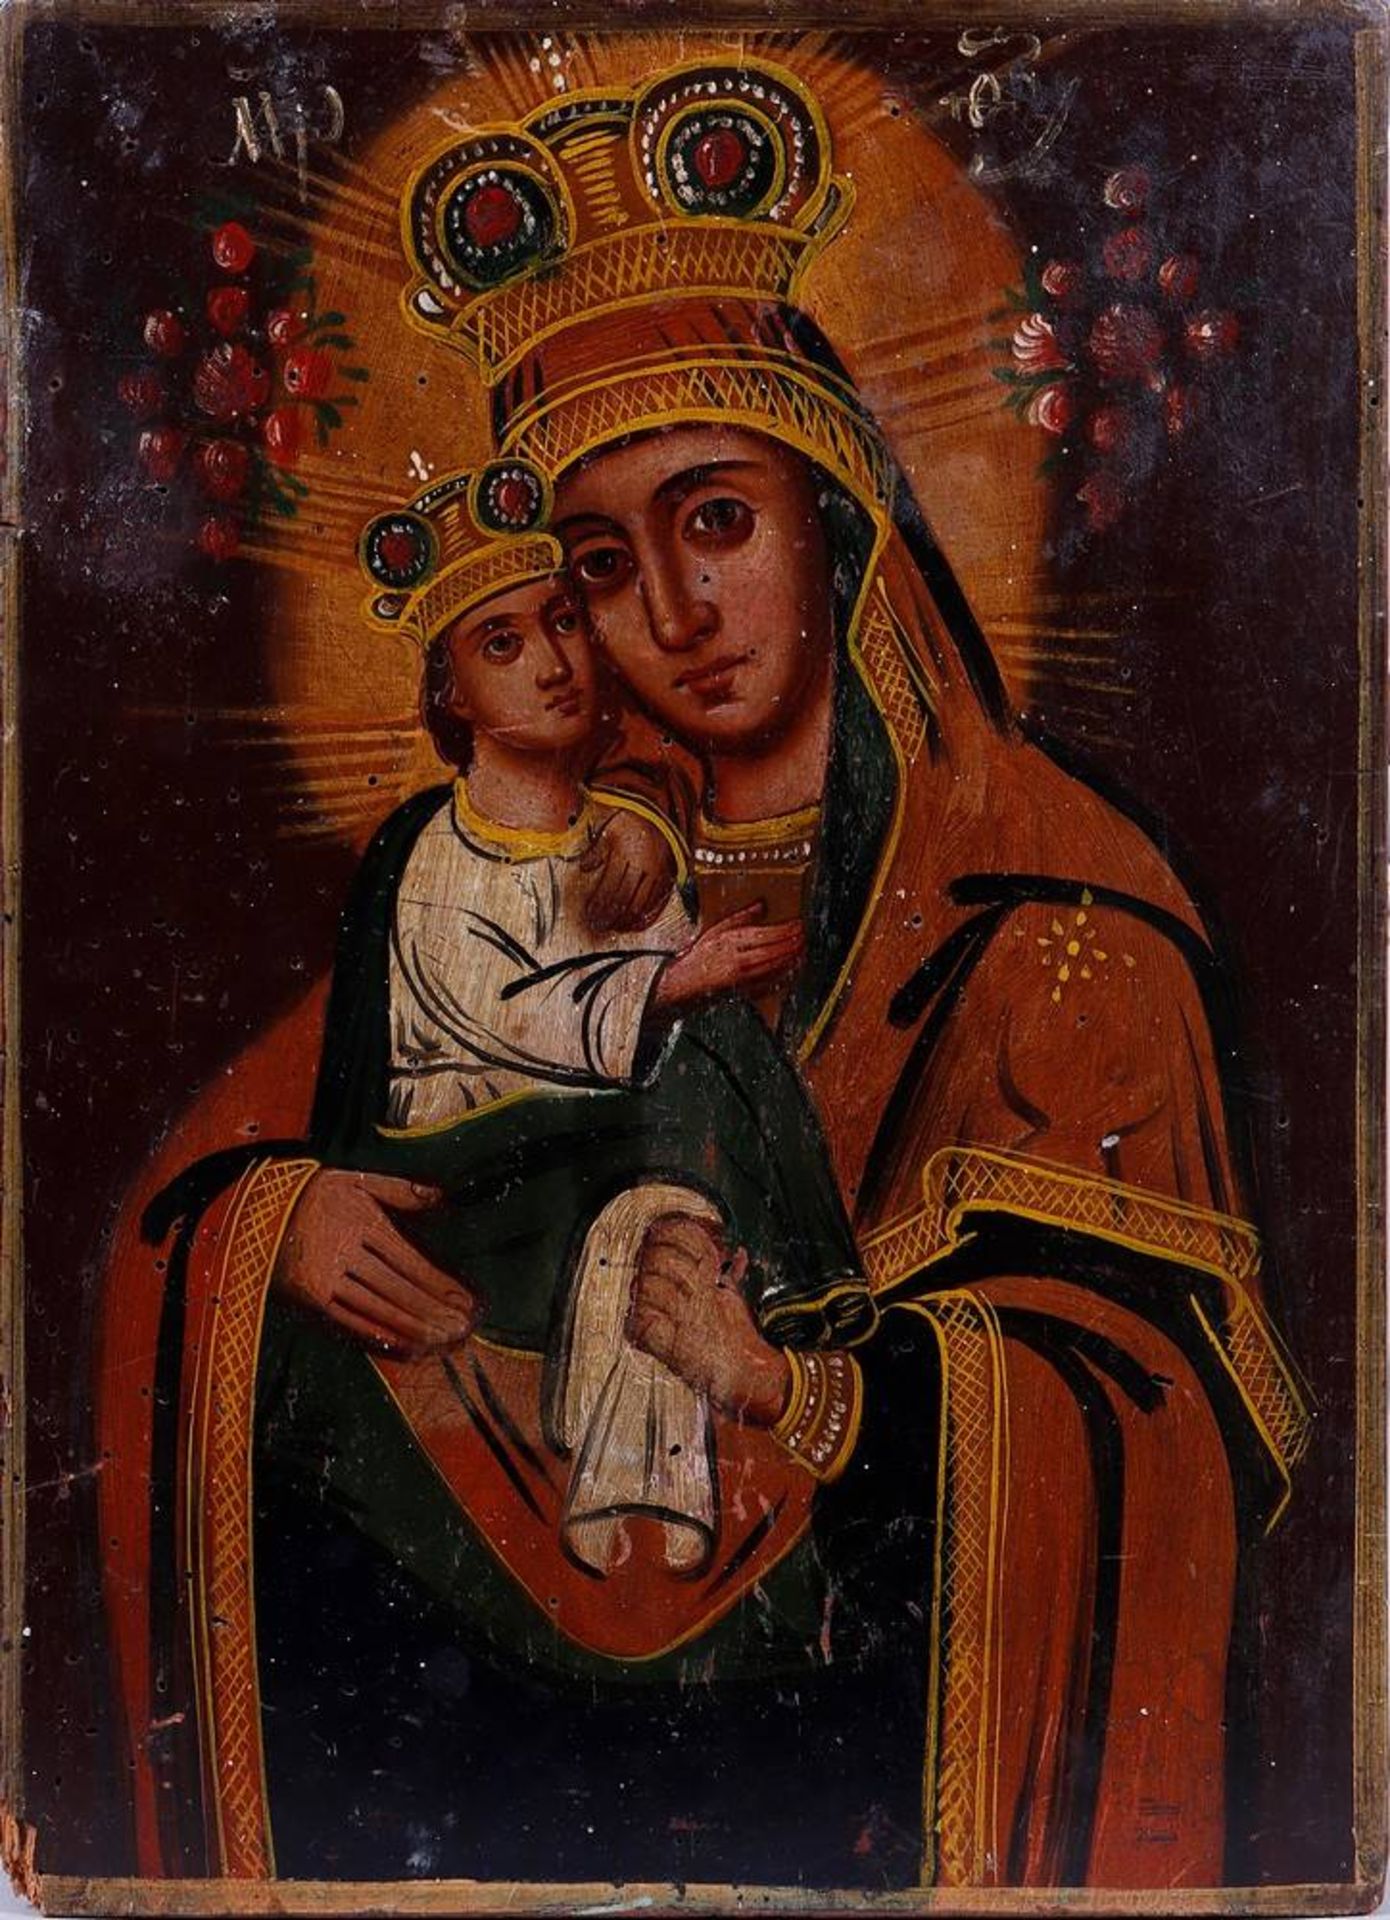 Icon, probably Greece, 19th C.